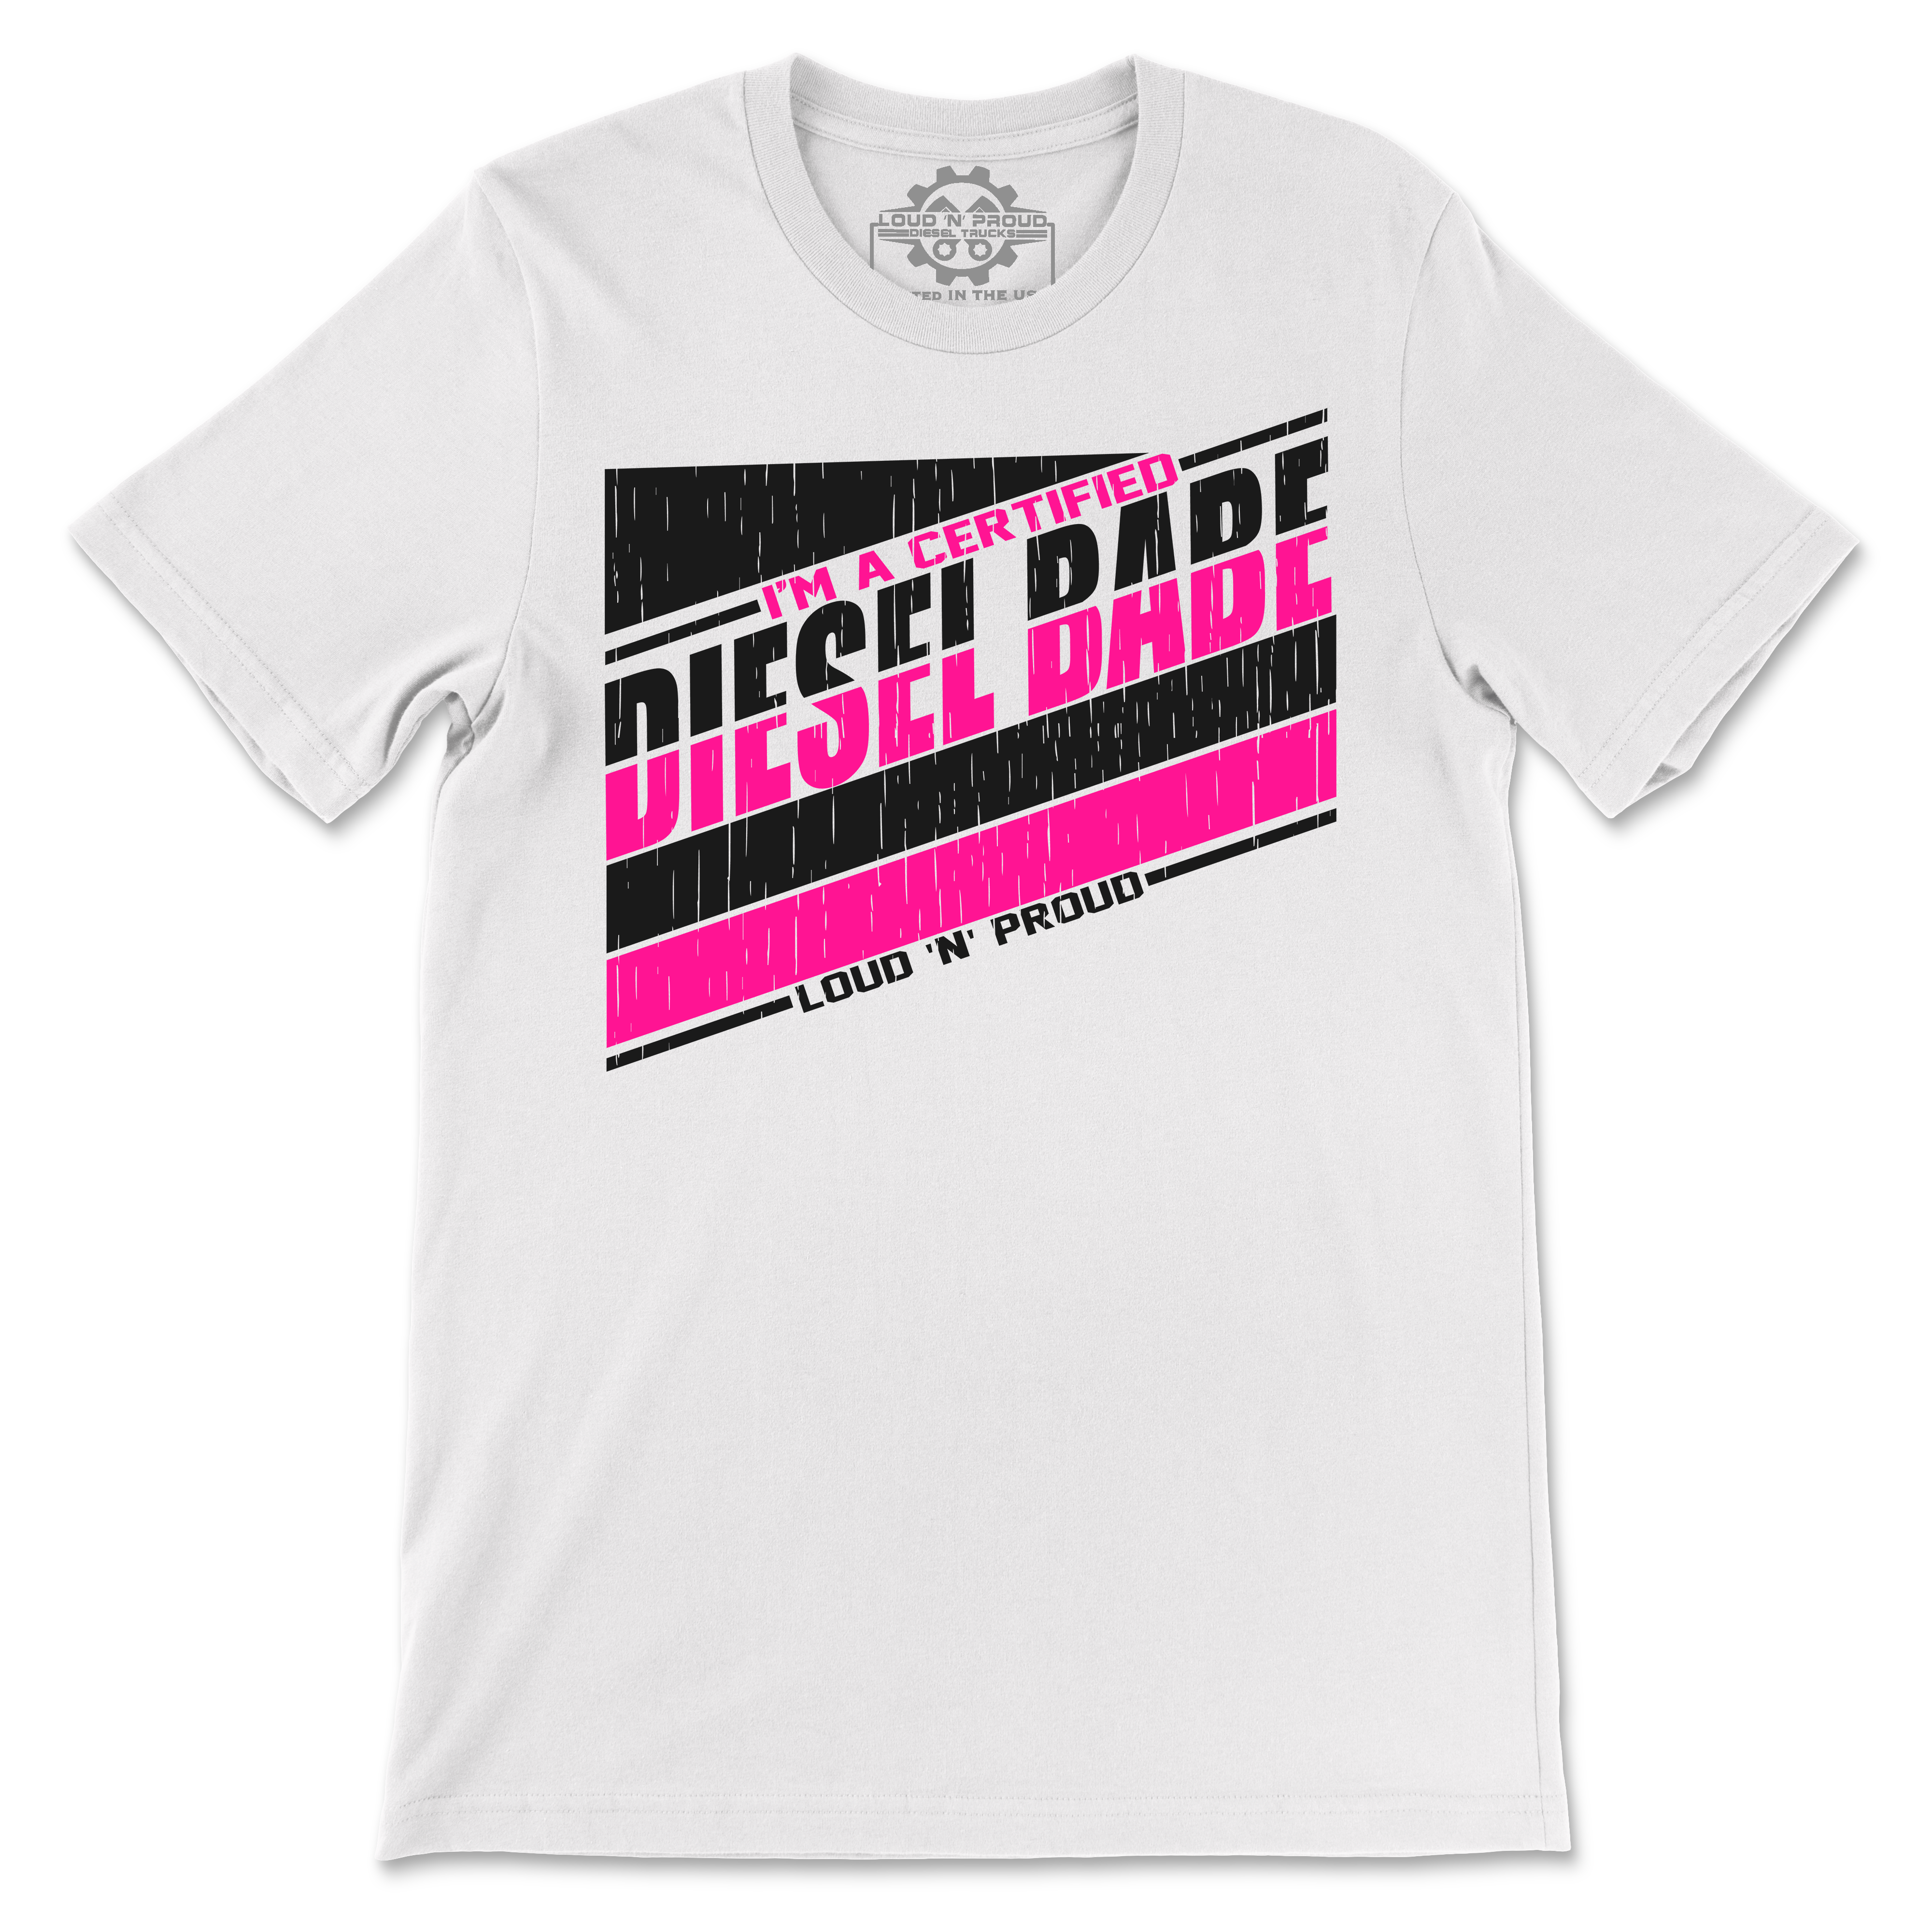 Certified Diesel Babe - T-Shirt